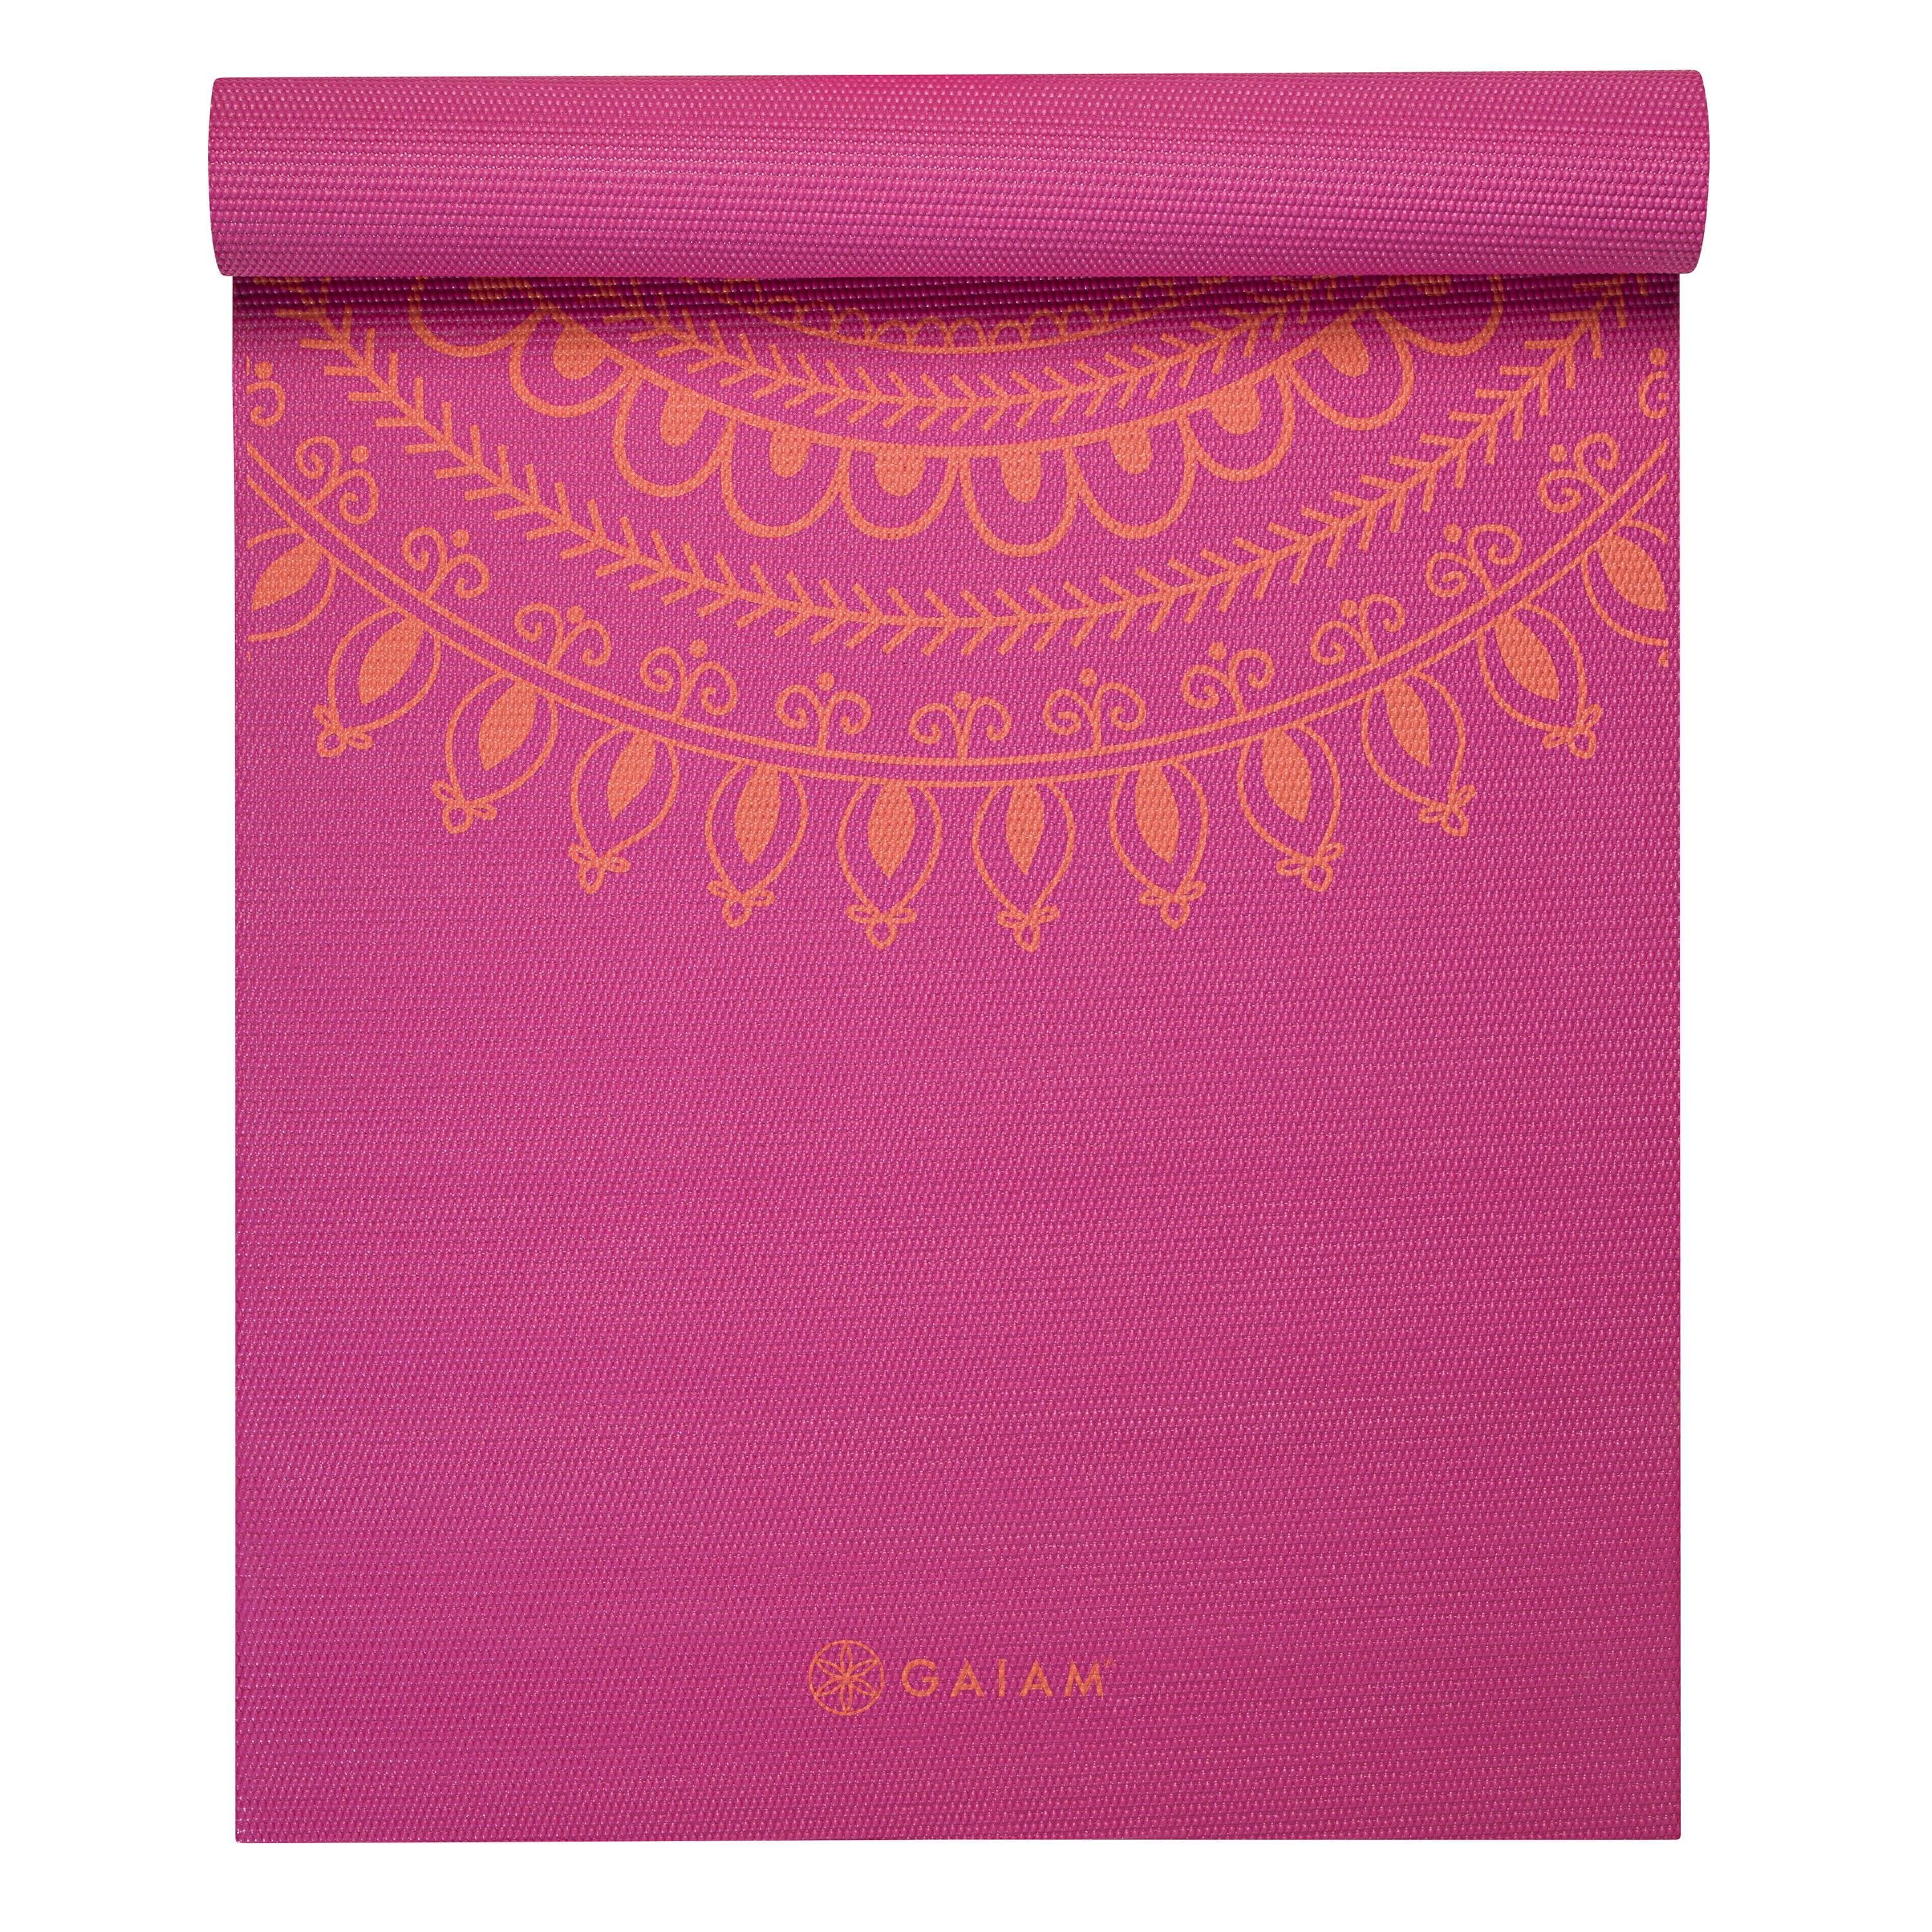 omroeper plank kam Gaiam Premium Print Yoga Mat, Bright Marrakesh, 6mm - Walmart.com